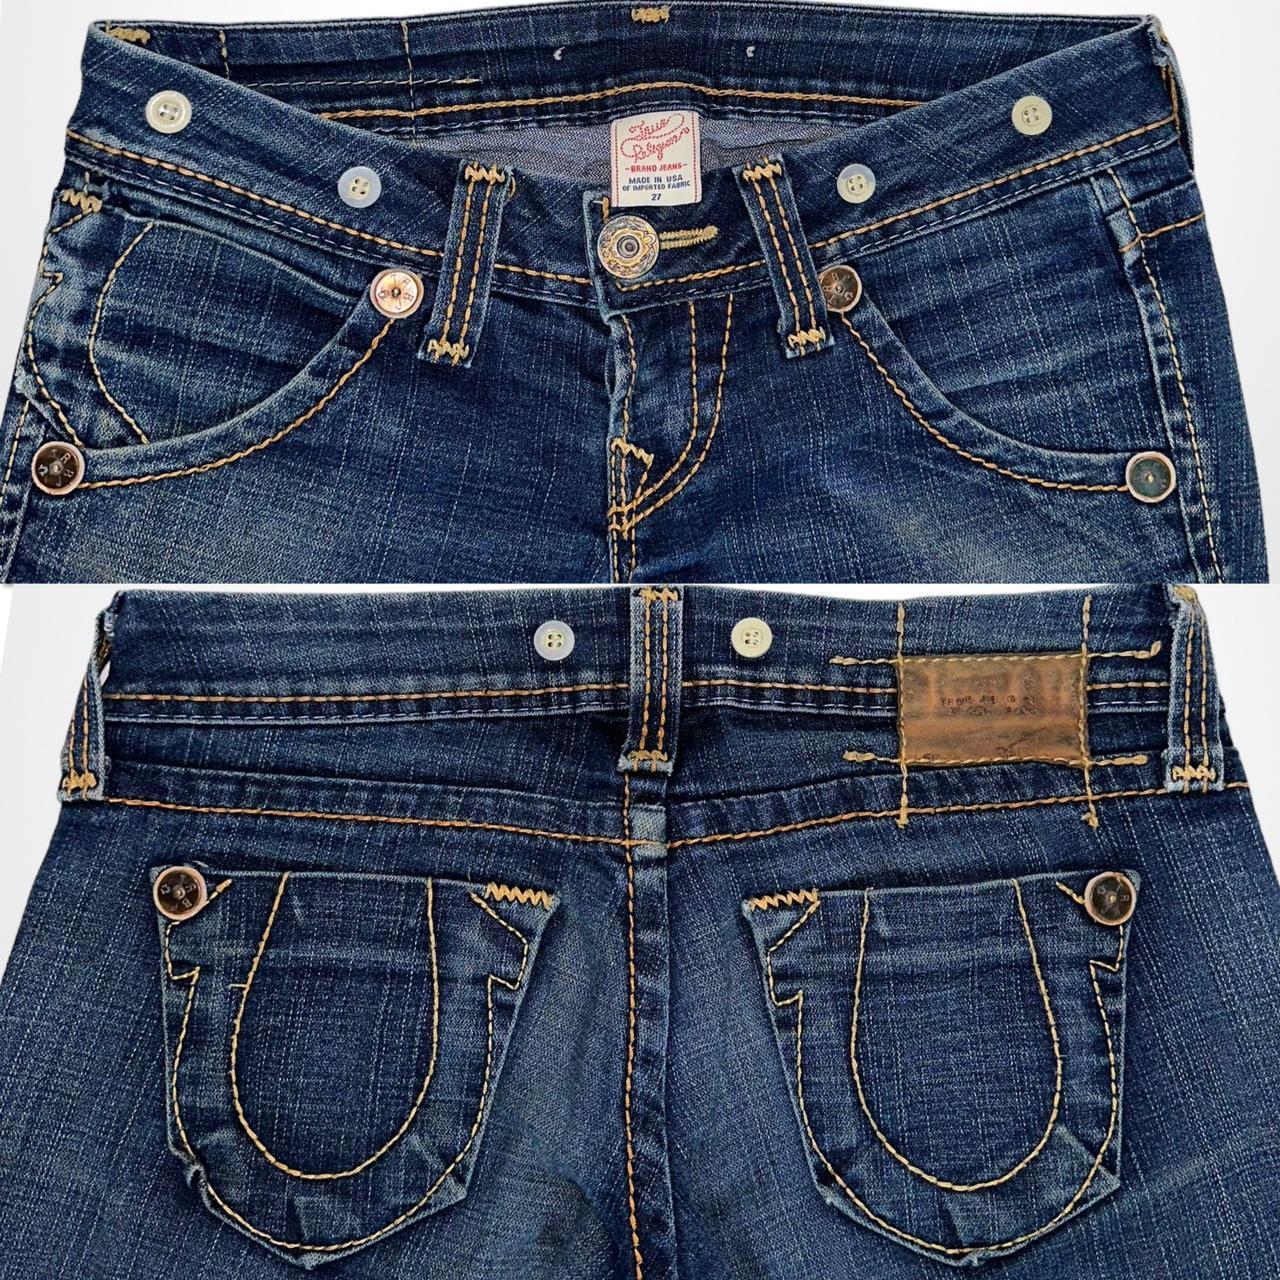 Vintage True Religion y2k dark wash distressed bootcut jeans